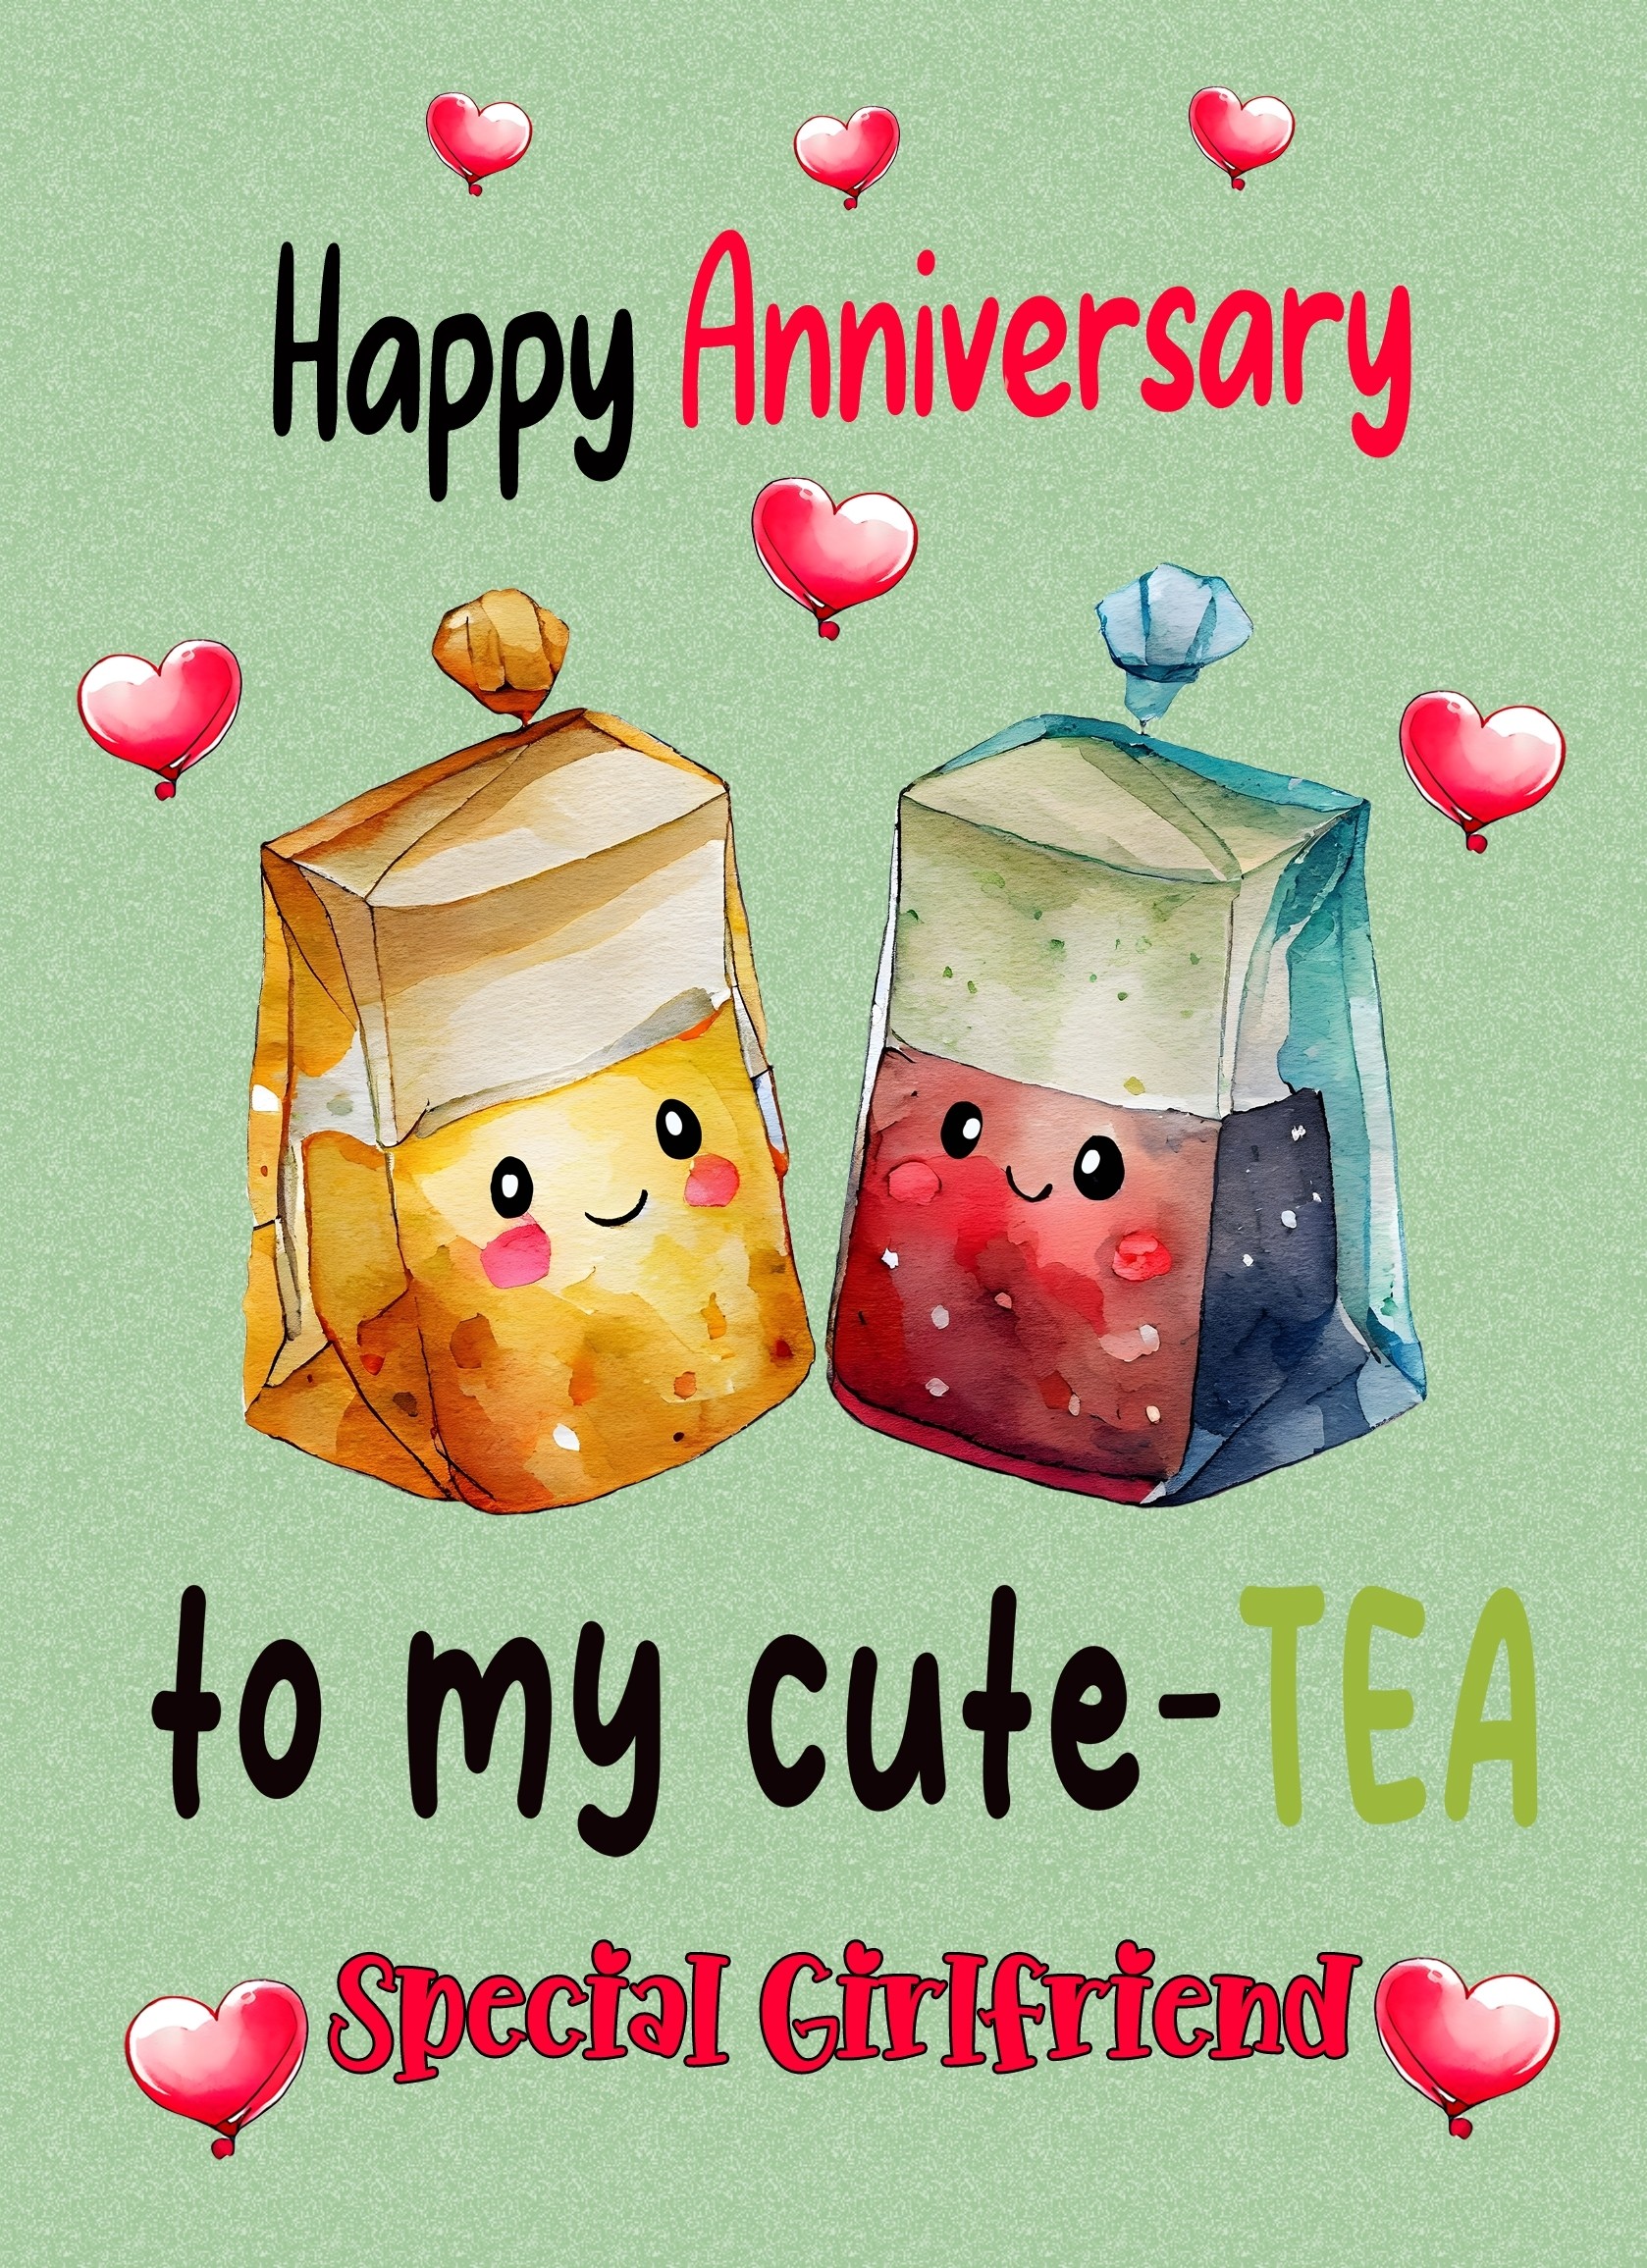 Funny Pun Romantic Anniversary Card for Girlfriend (Cute Tea)